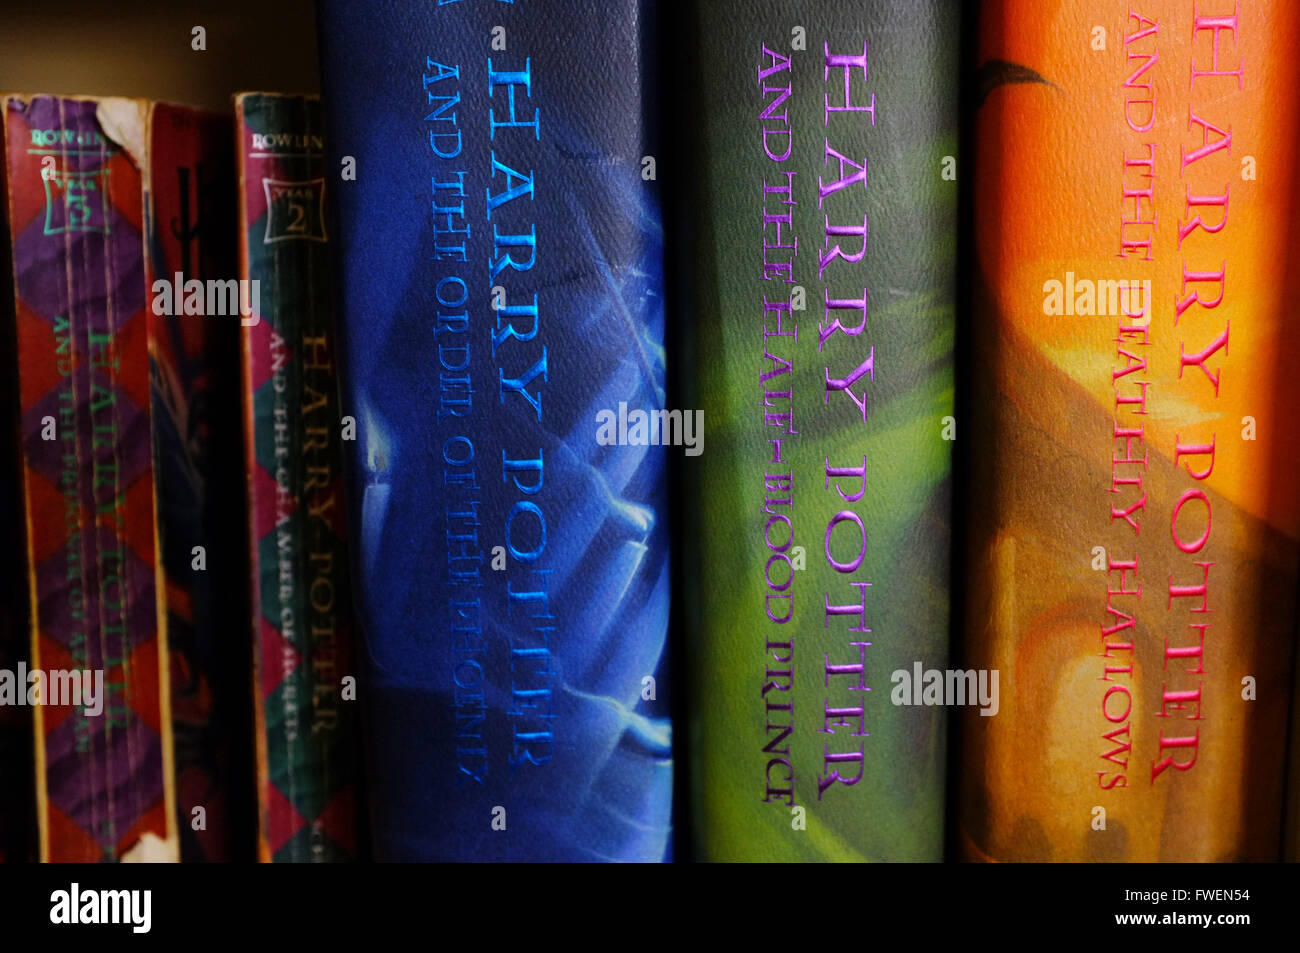 Harry potter books together on a bookshelf. Stock Photo